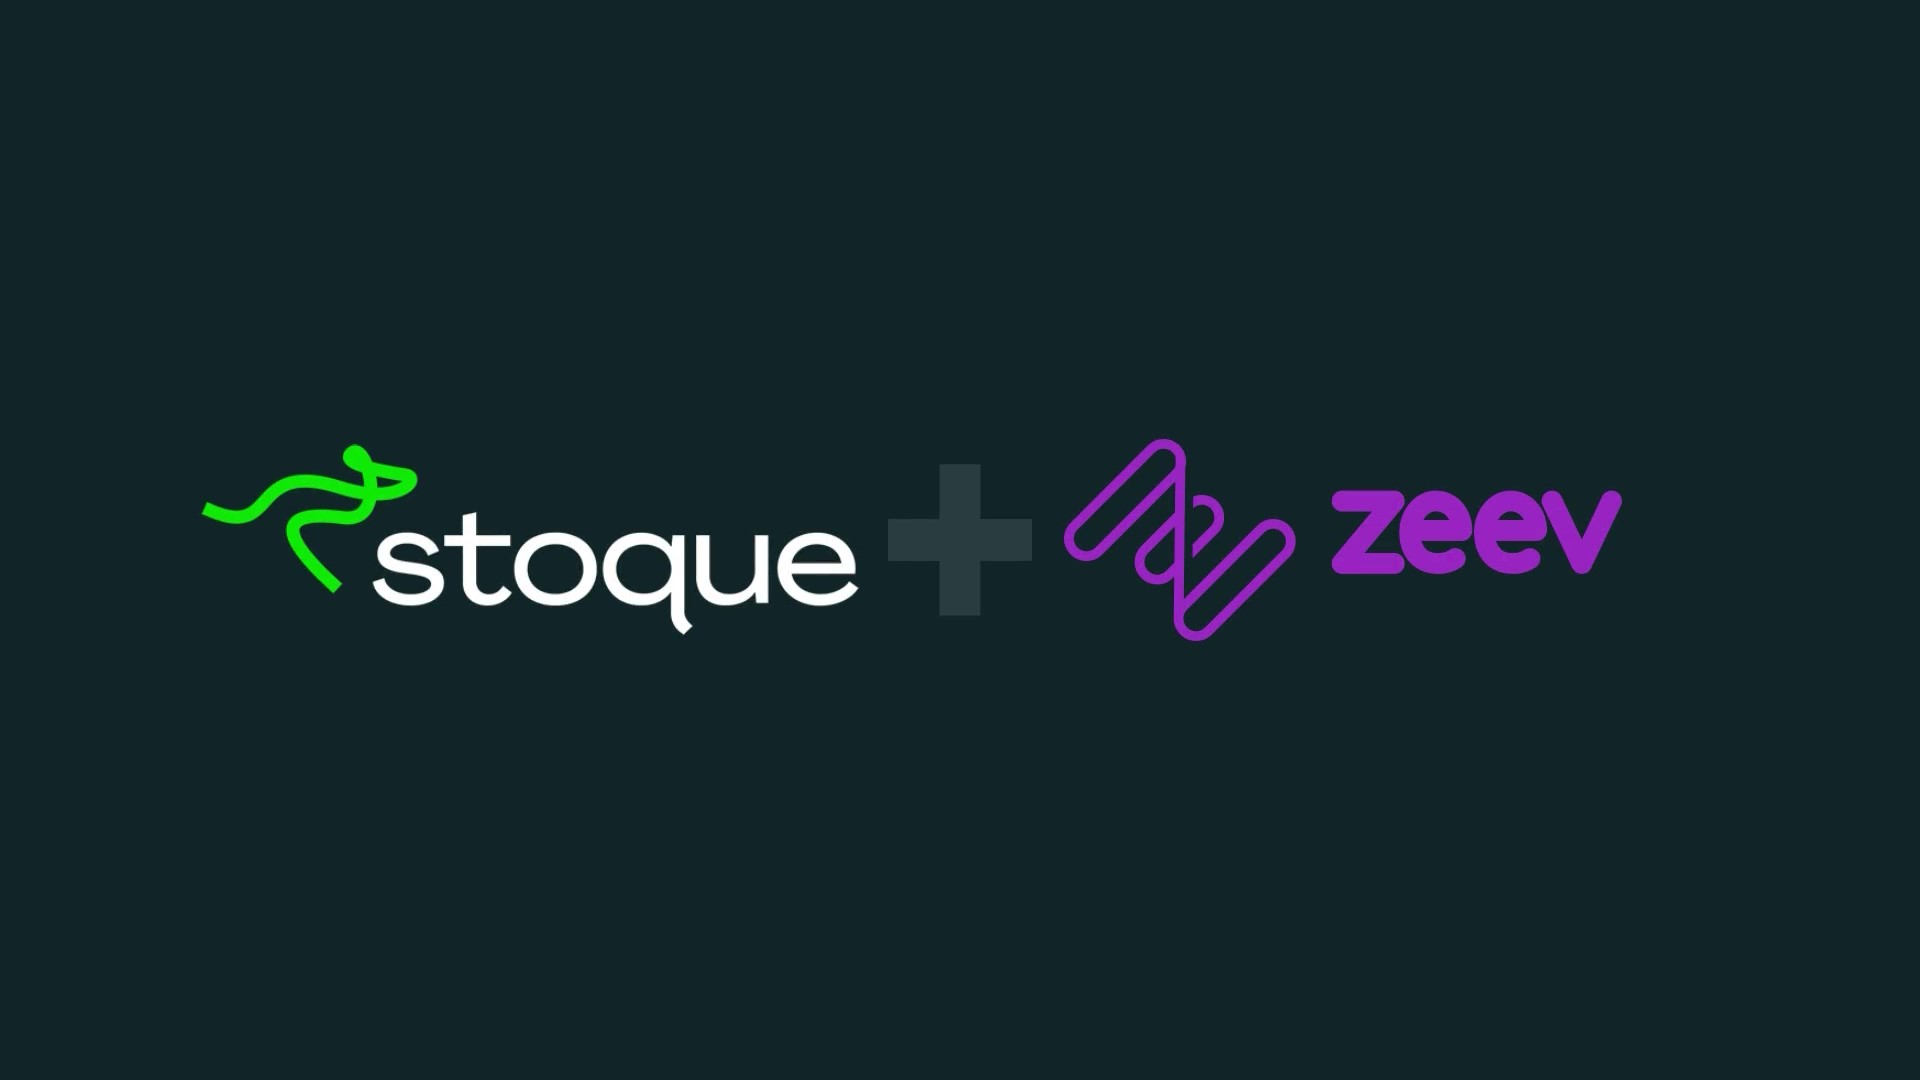 Logos Stoque + Zeev